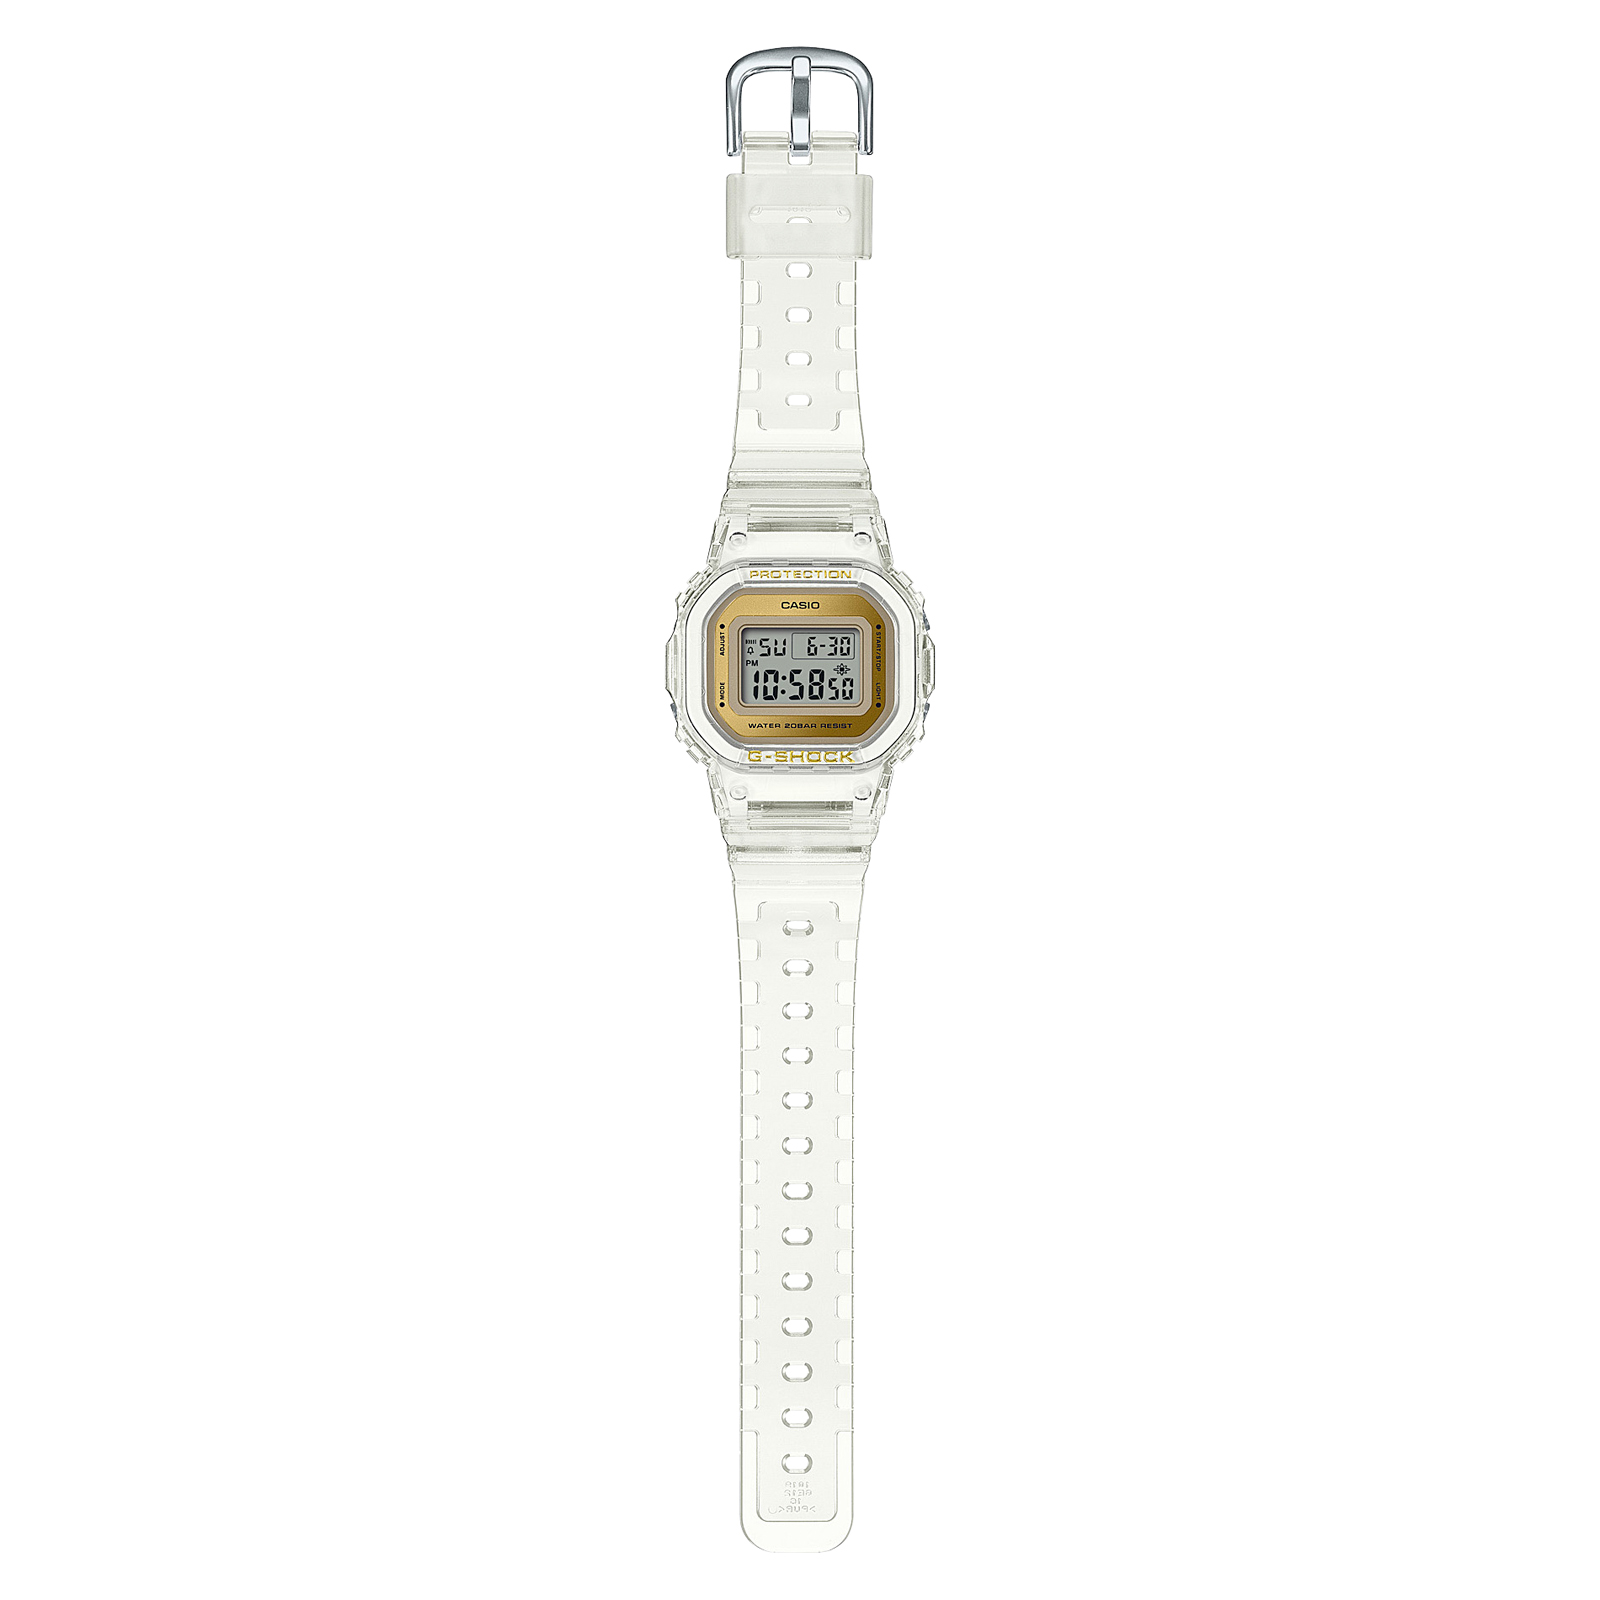 Reloj G-SHOCK GMD-S5600SG-7D Resina Mujer Transparente